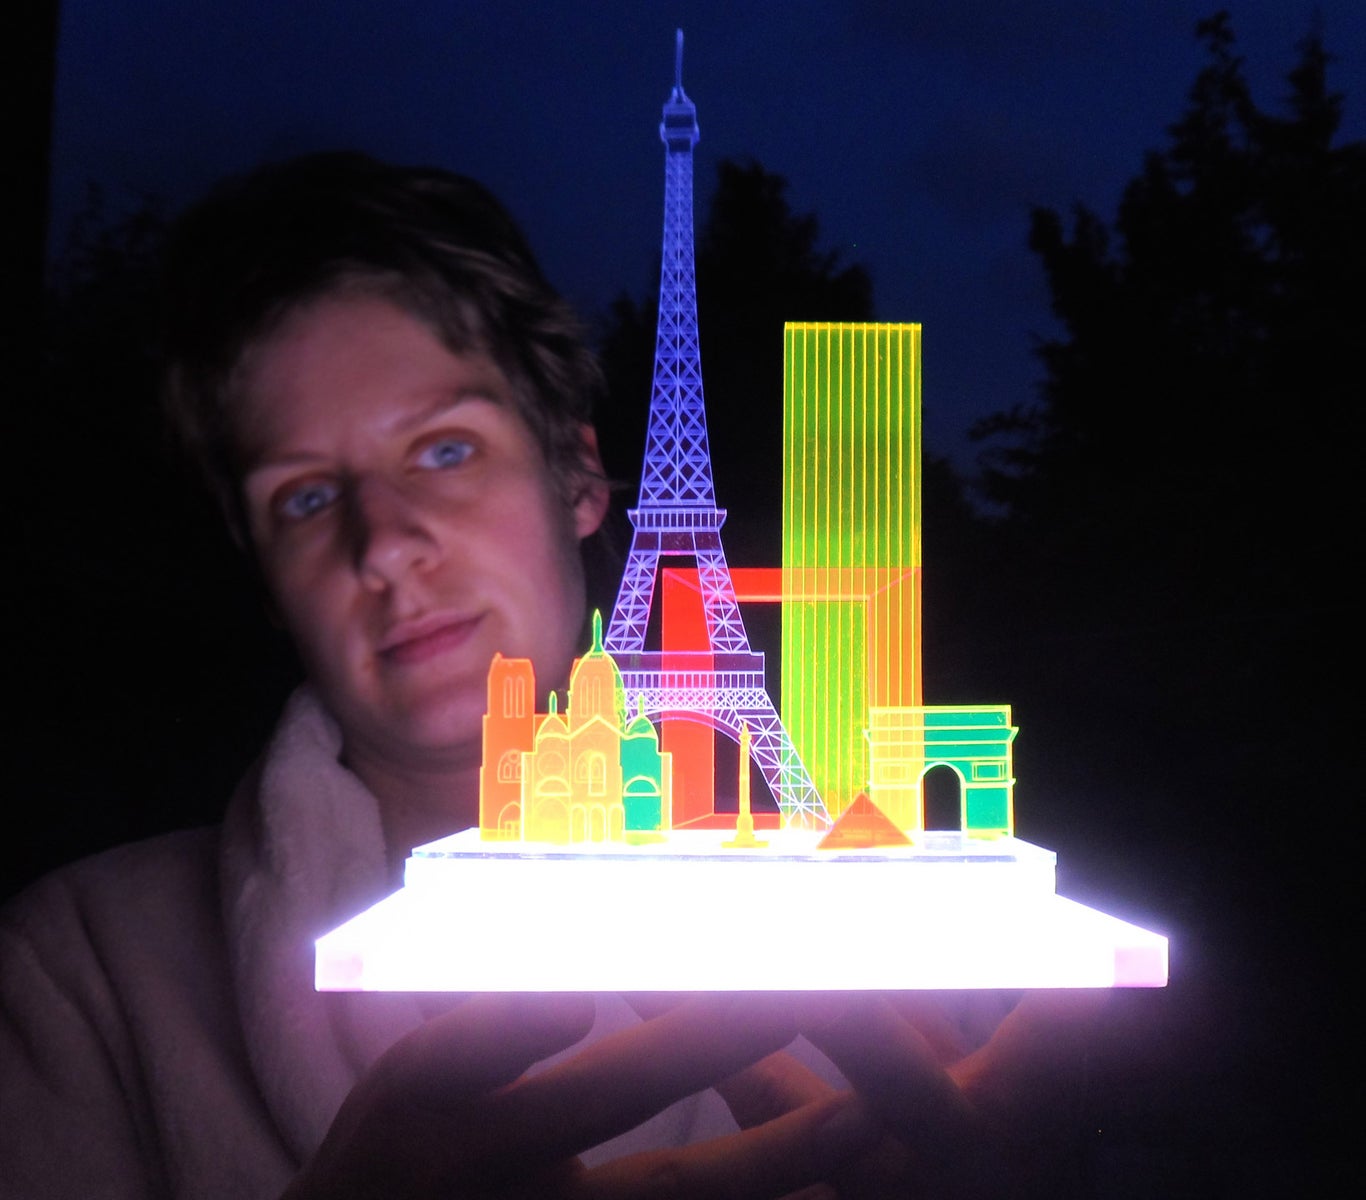 Modular neon sculpture HK/London/NYC/Paris/Tokyo/SF/Washington D.C.